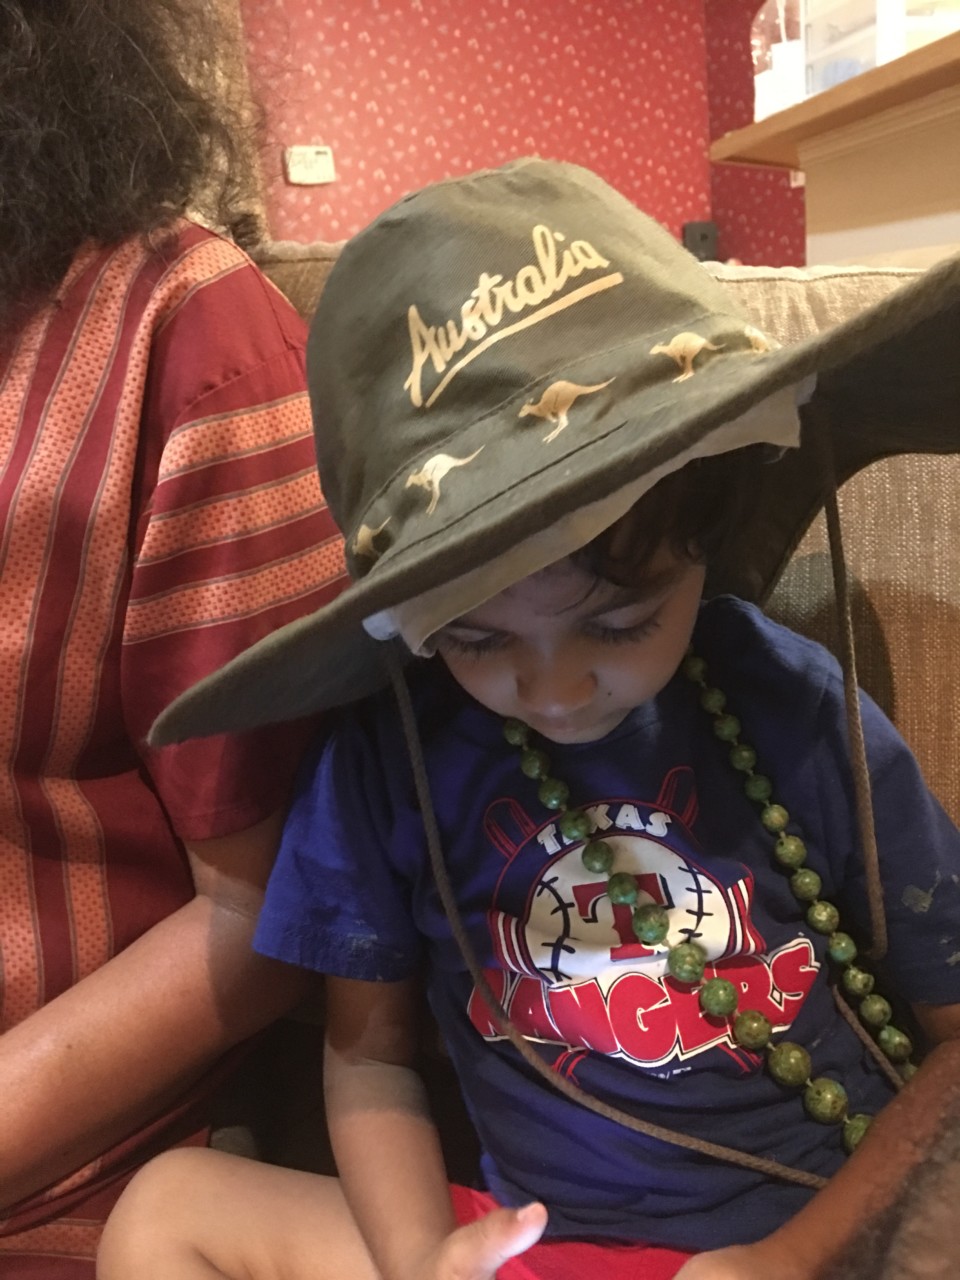 Ashok with Australia hat